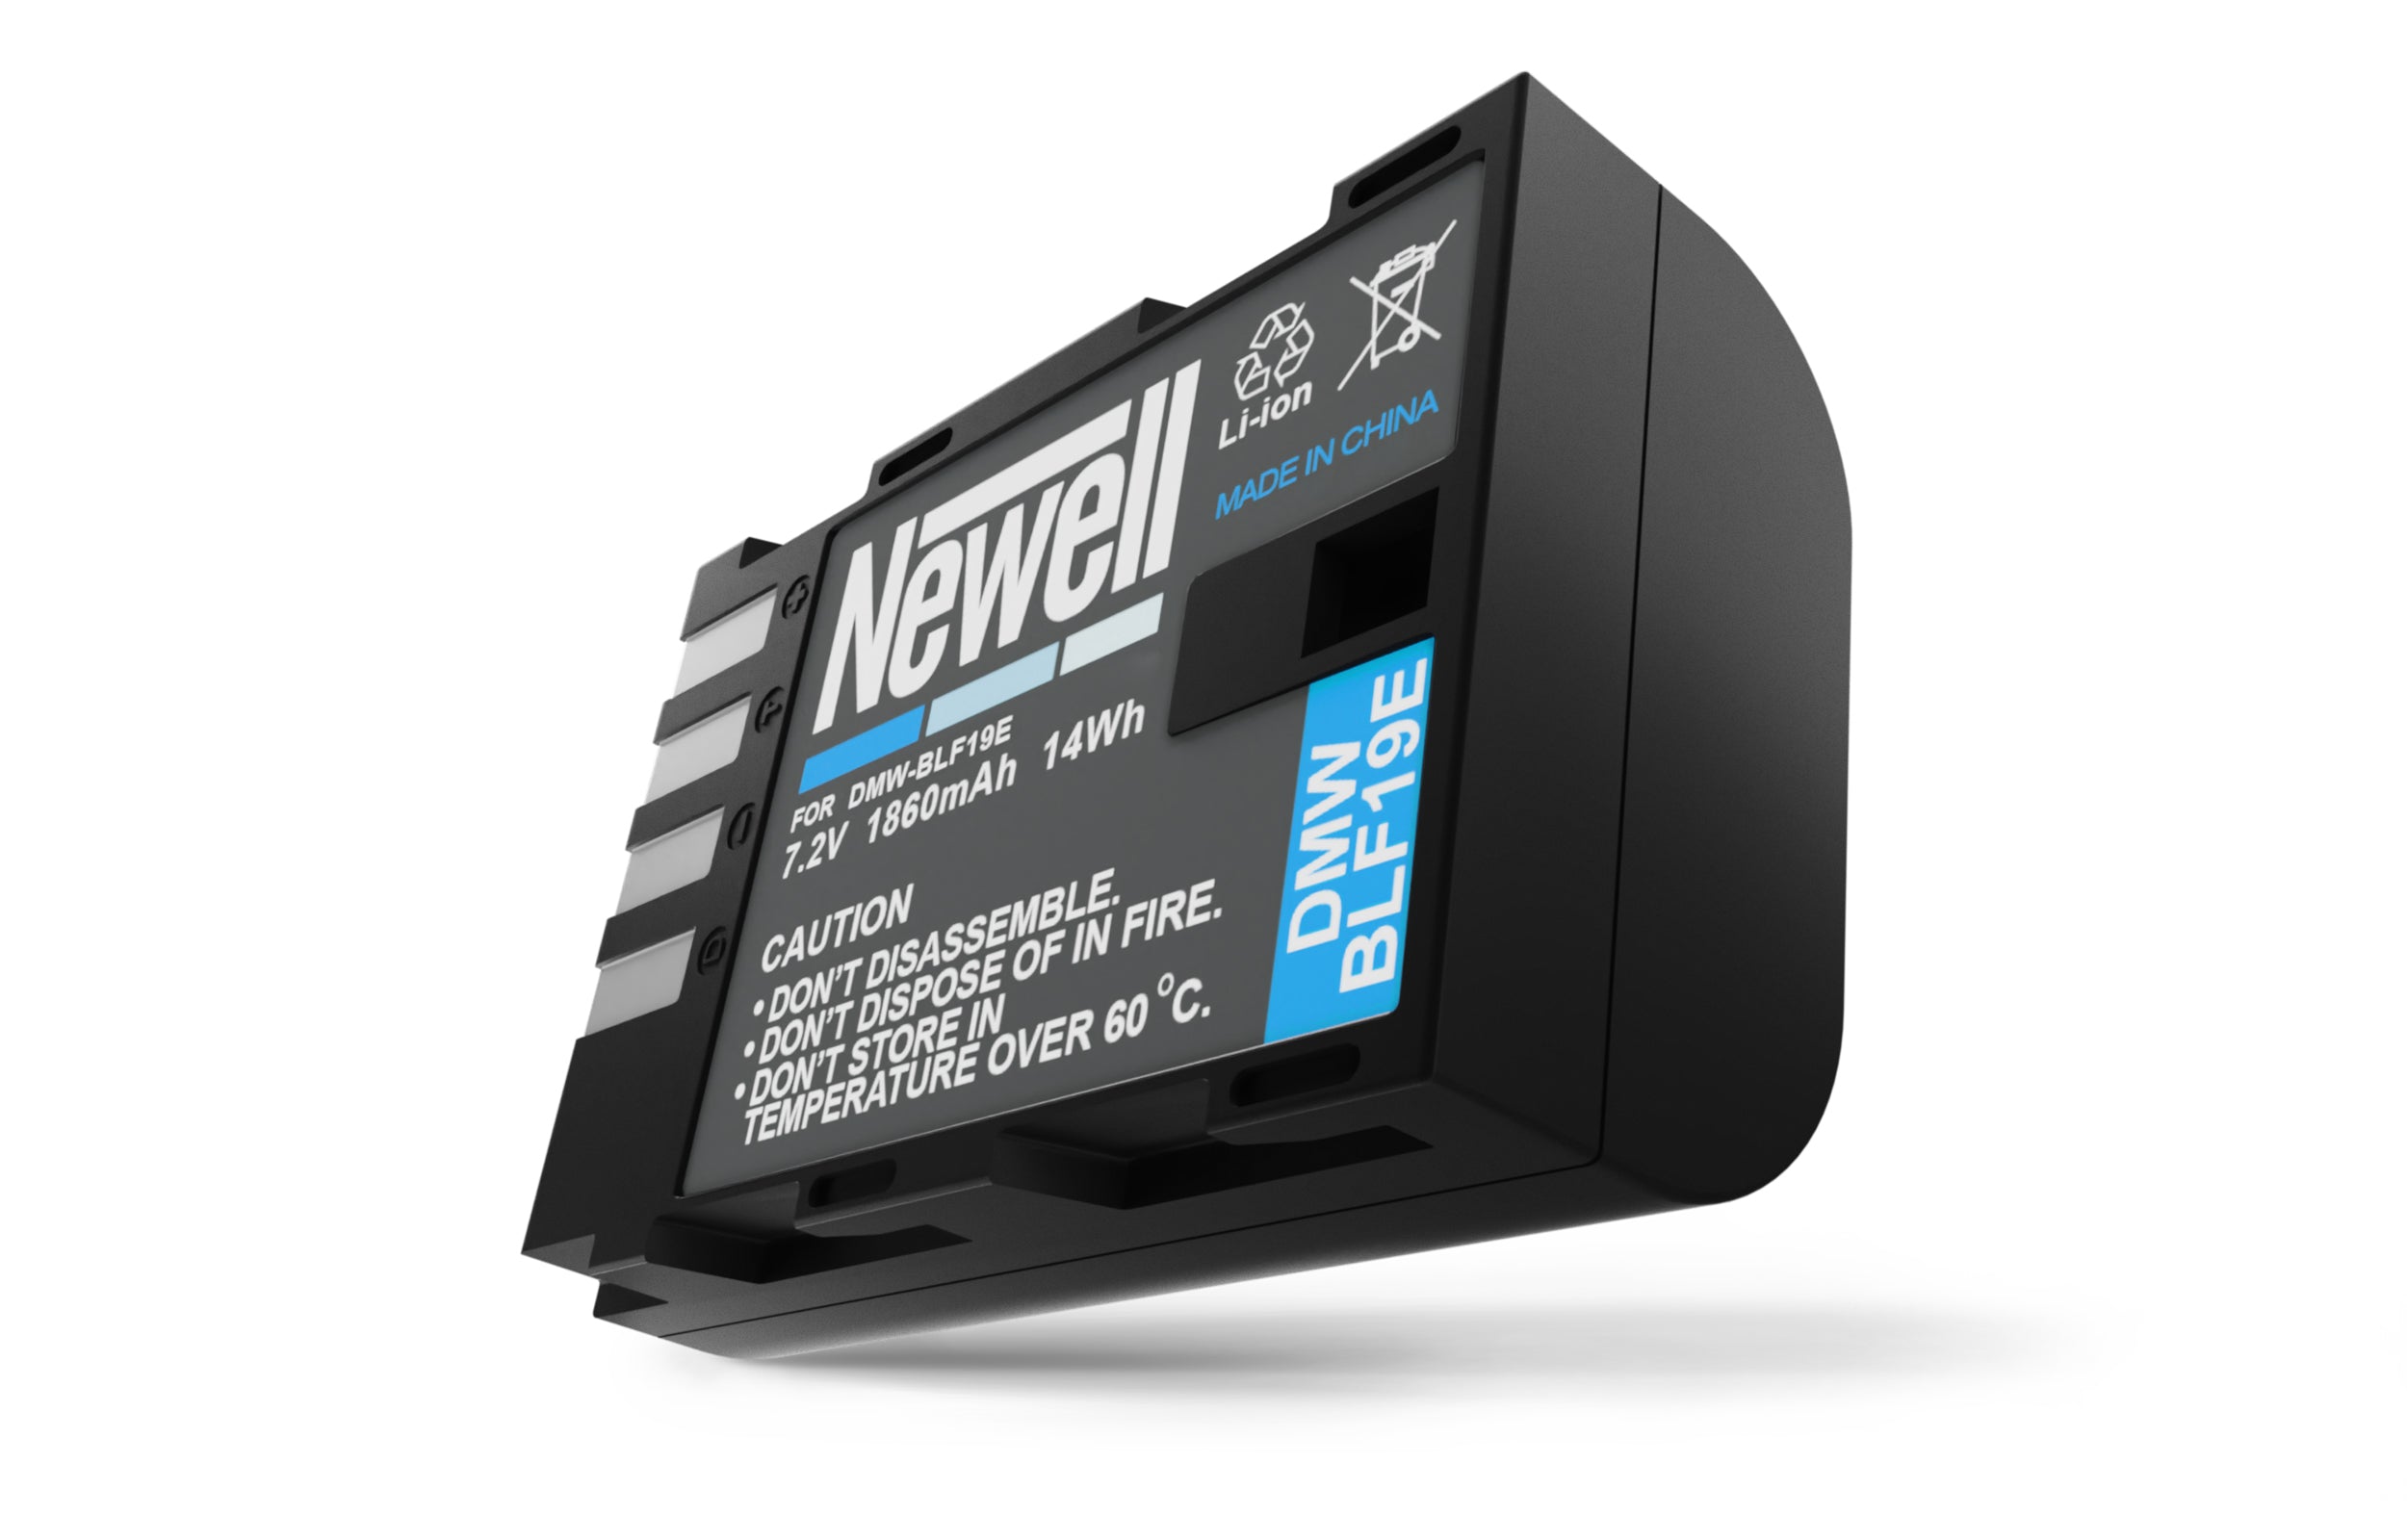 Newell rechargeable battery DMW-BLF19E